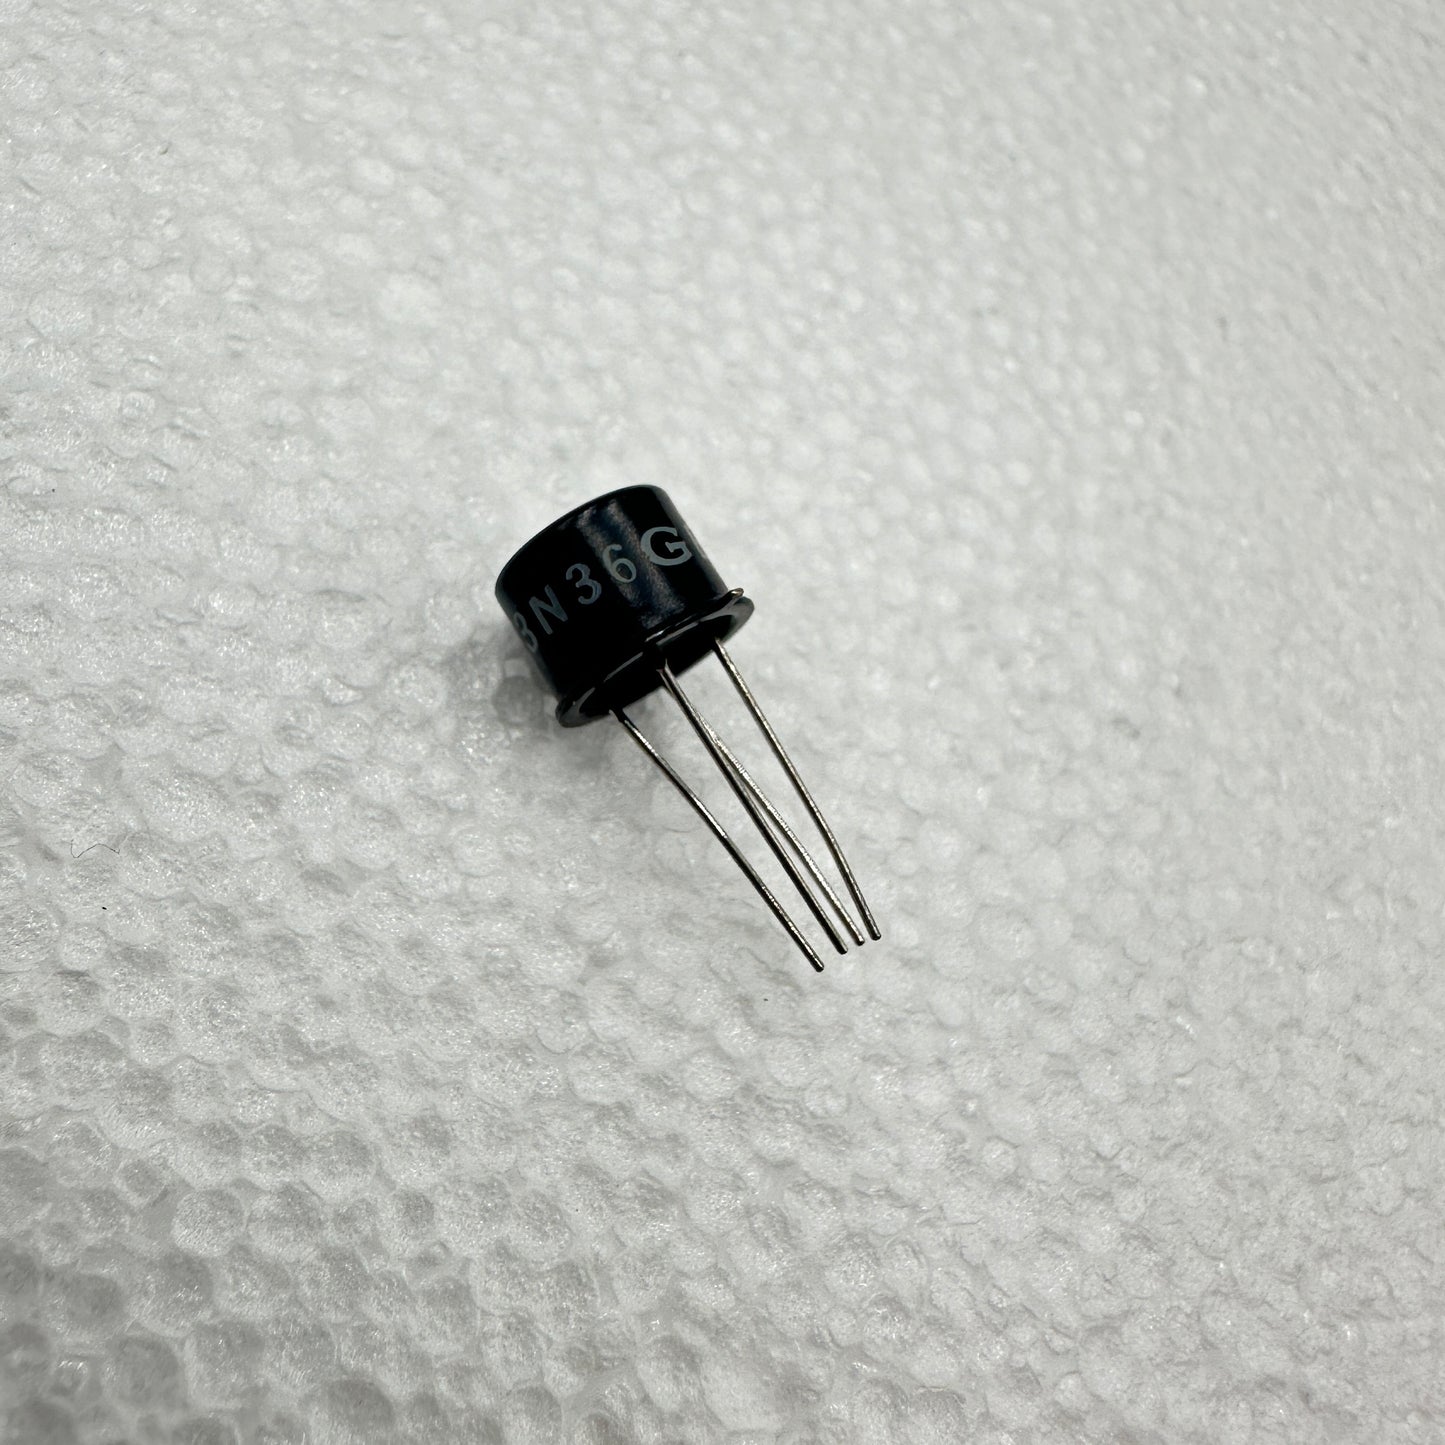 3n36 4-Leg Transistor NOS - Rare & Reclaimed